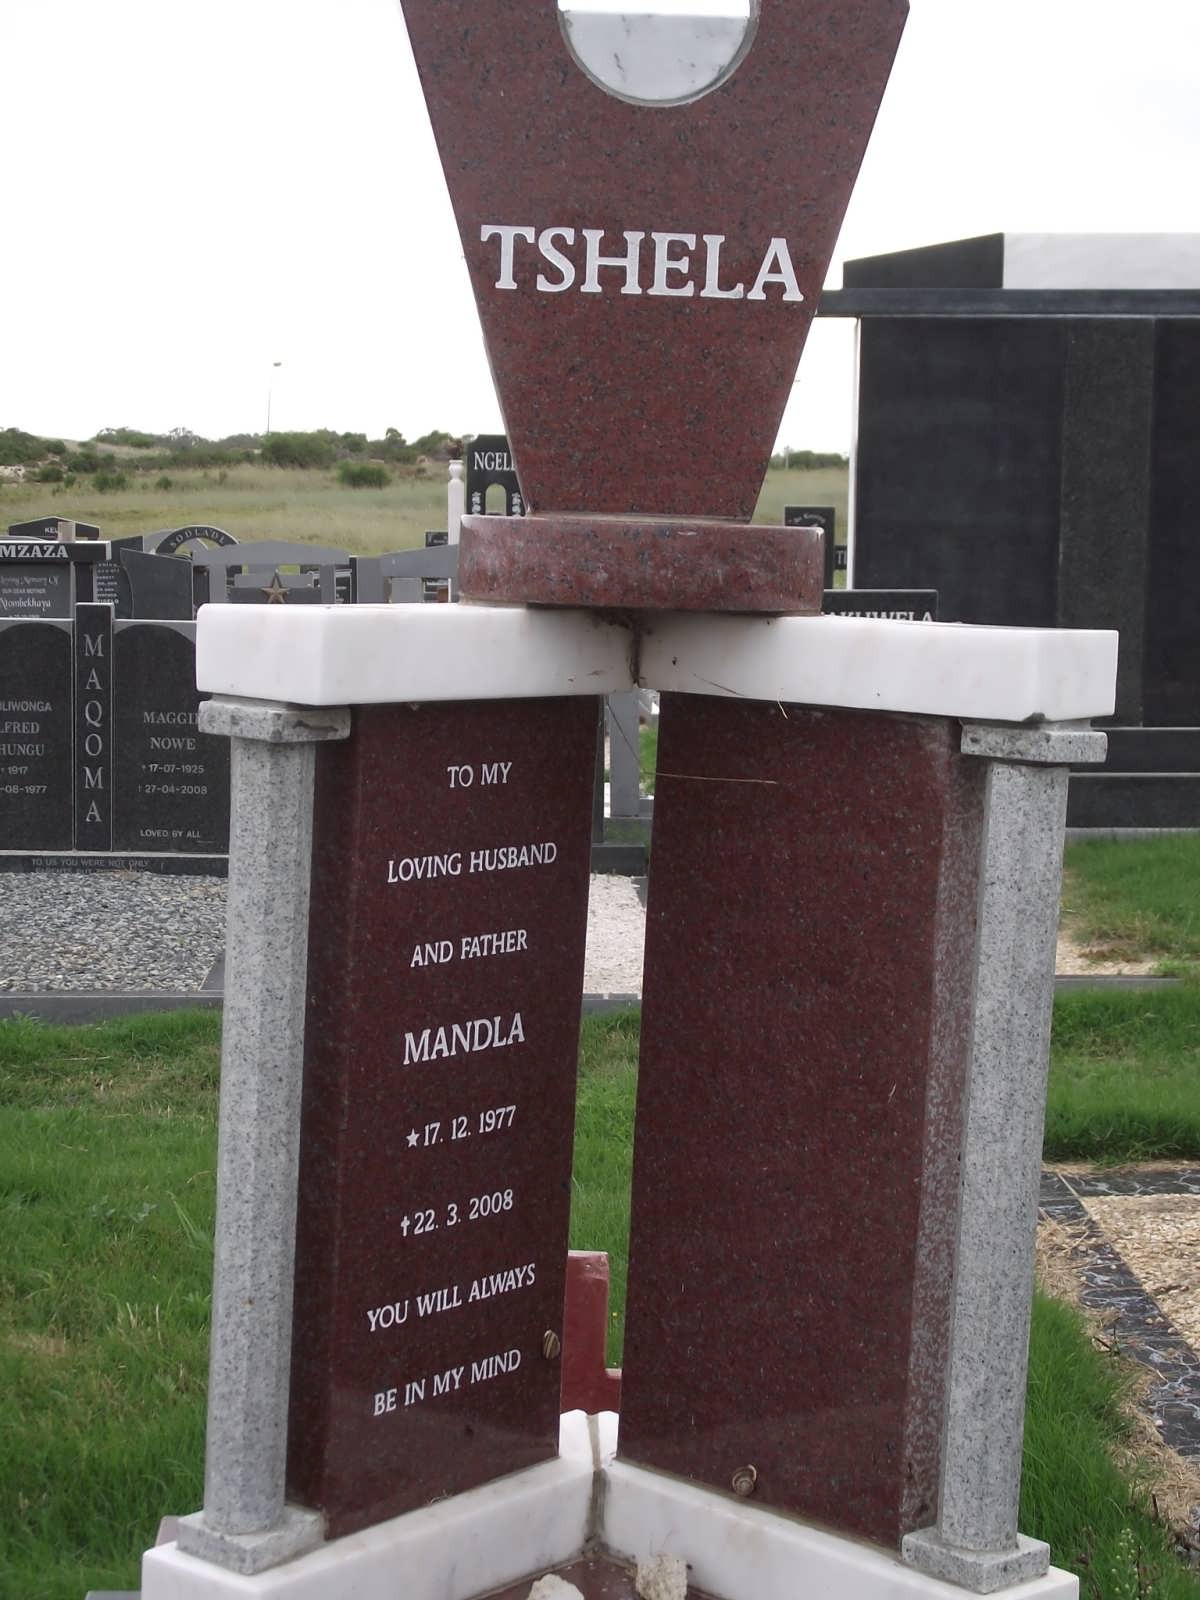 TSHELA Mandla 1977-2008